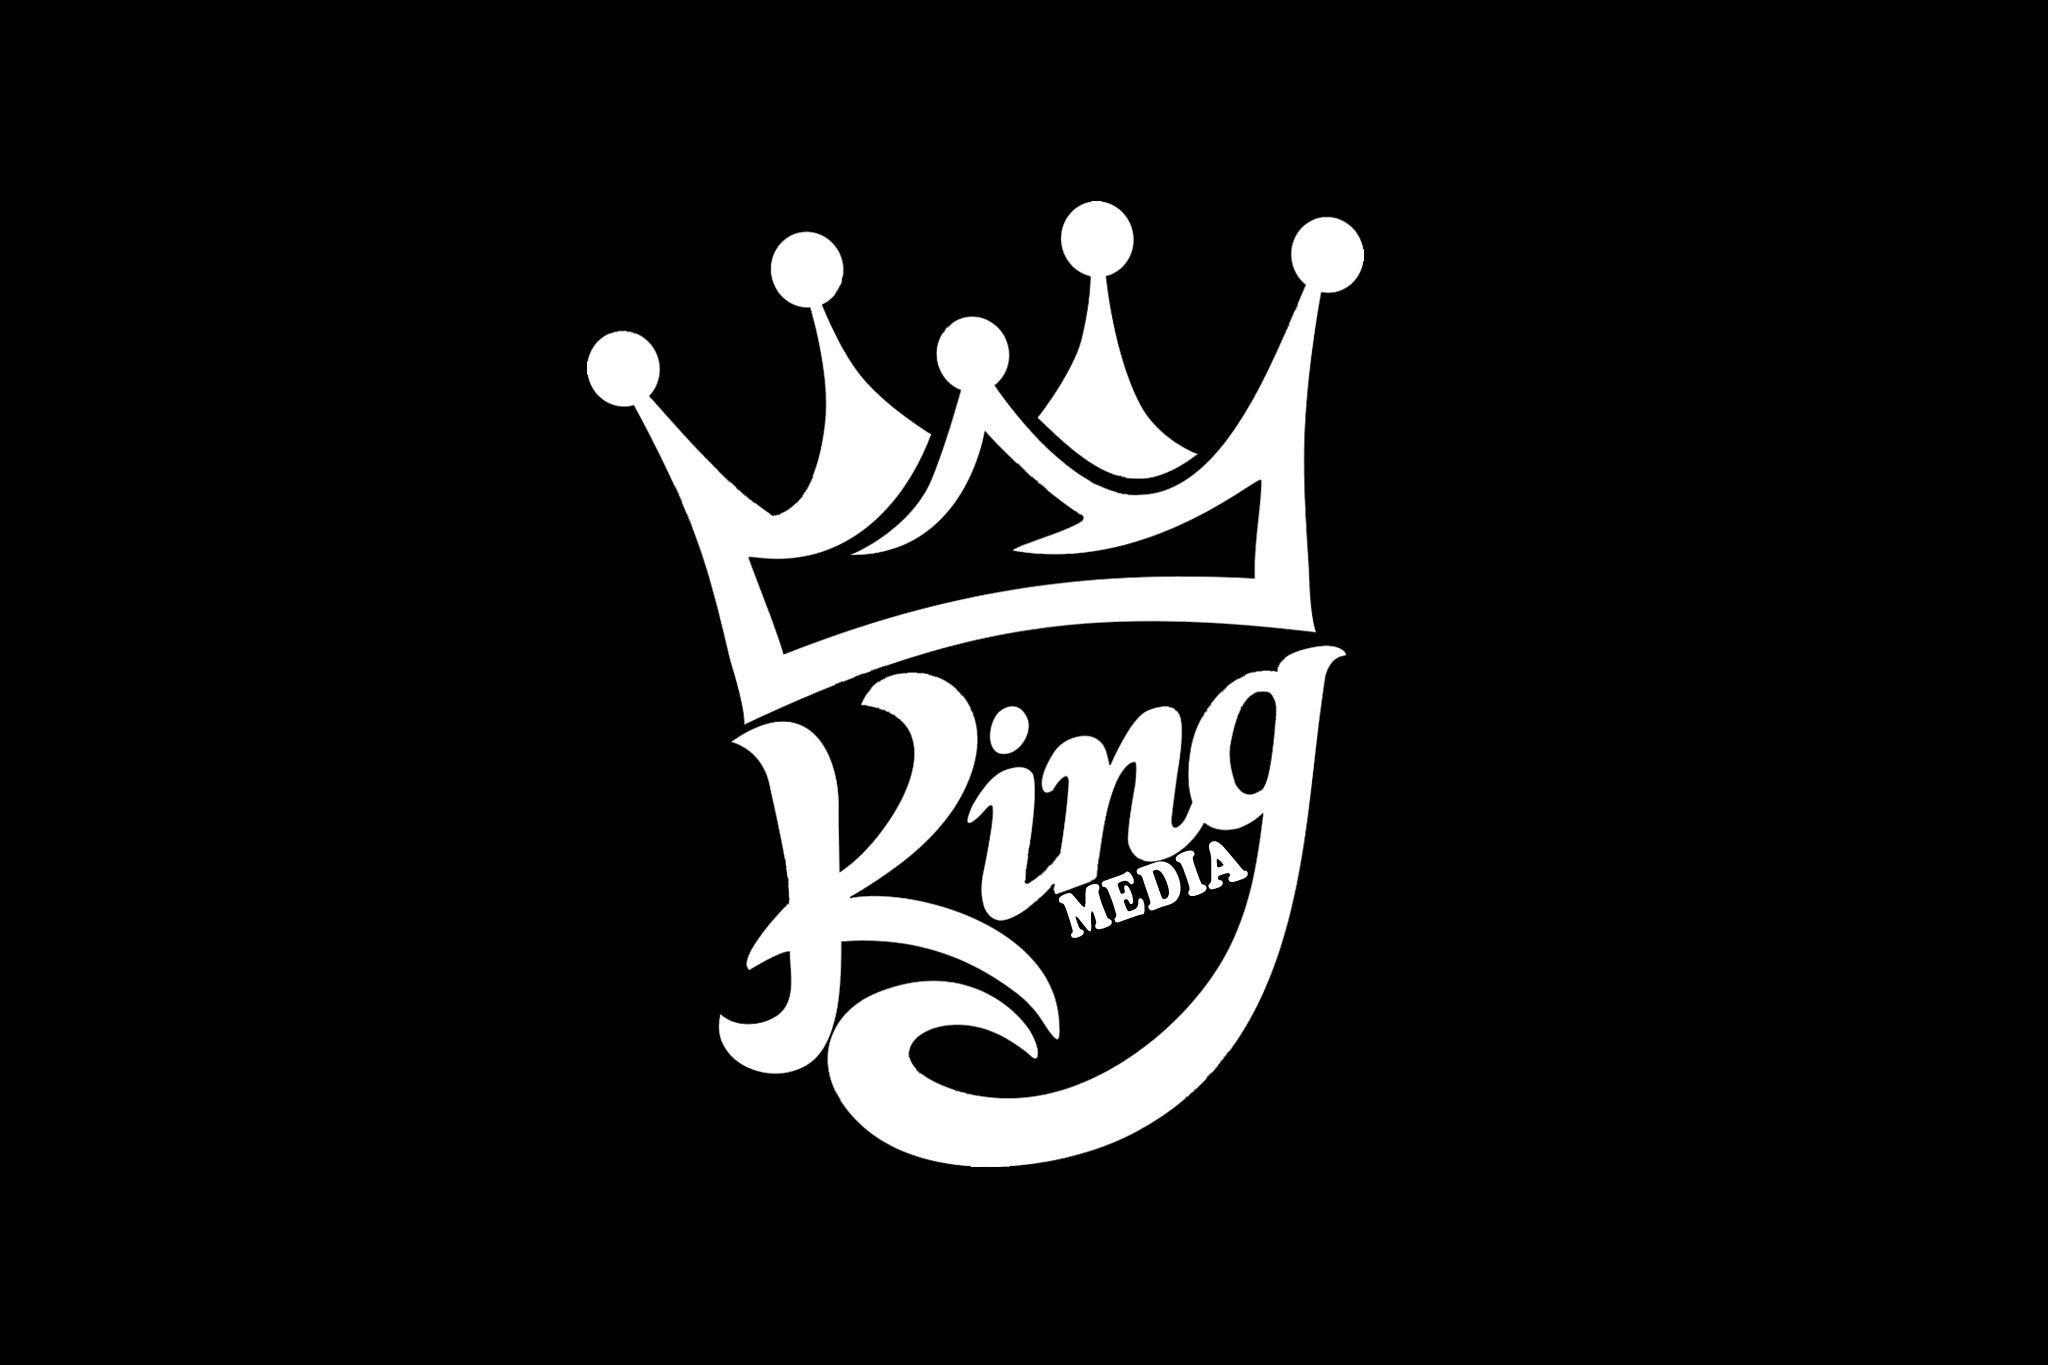 Last King Logos Wallpapers